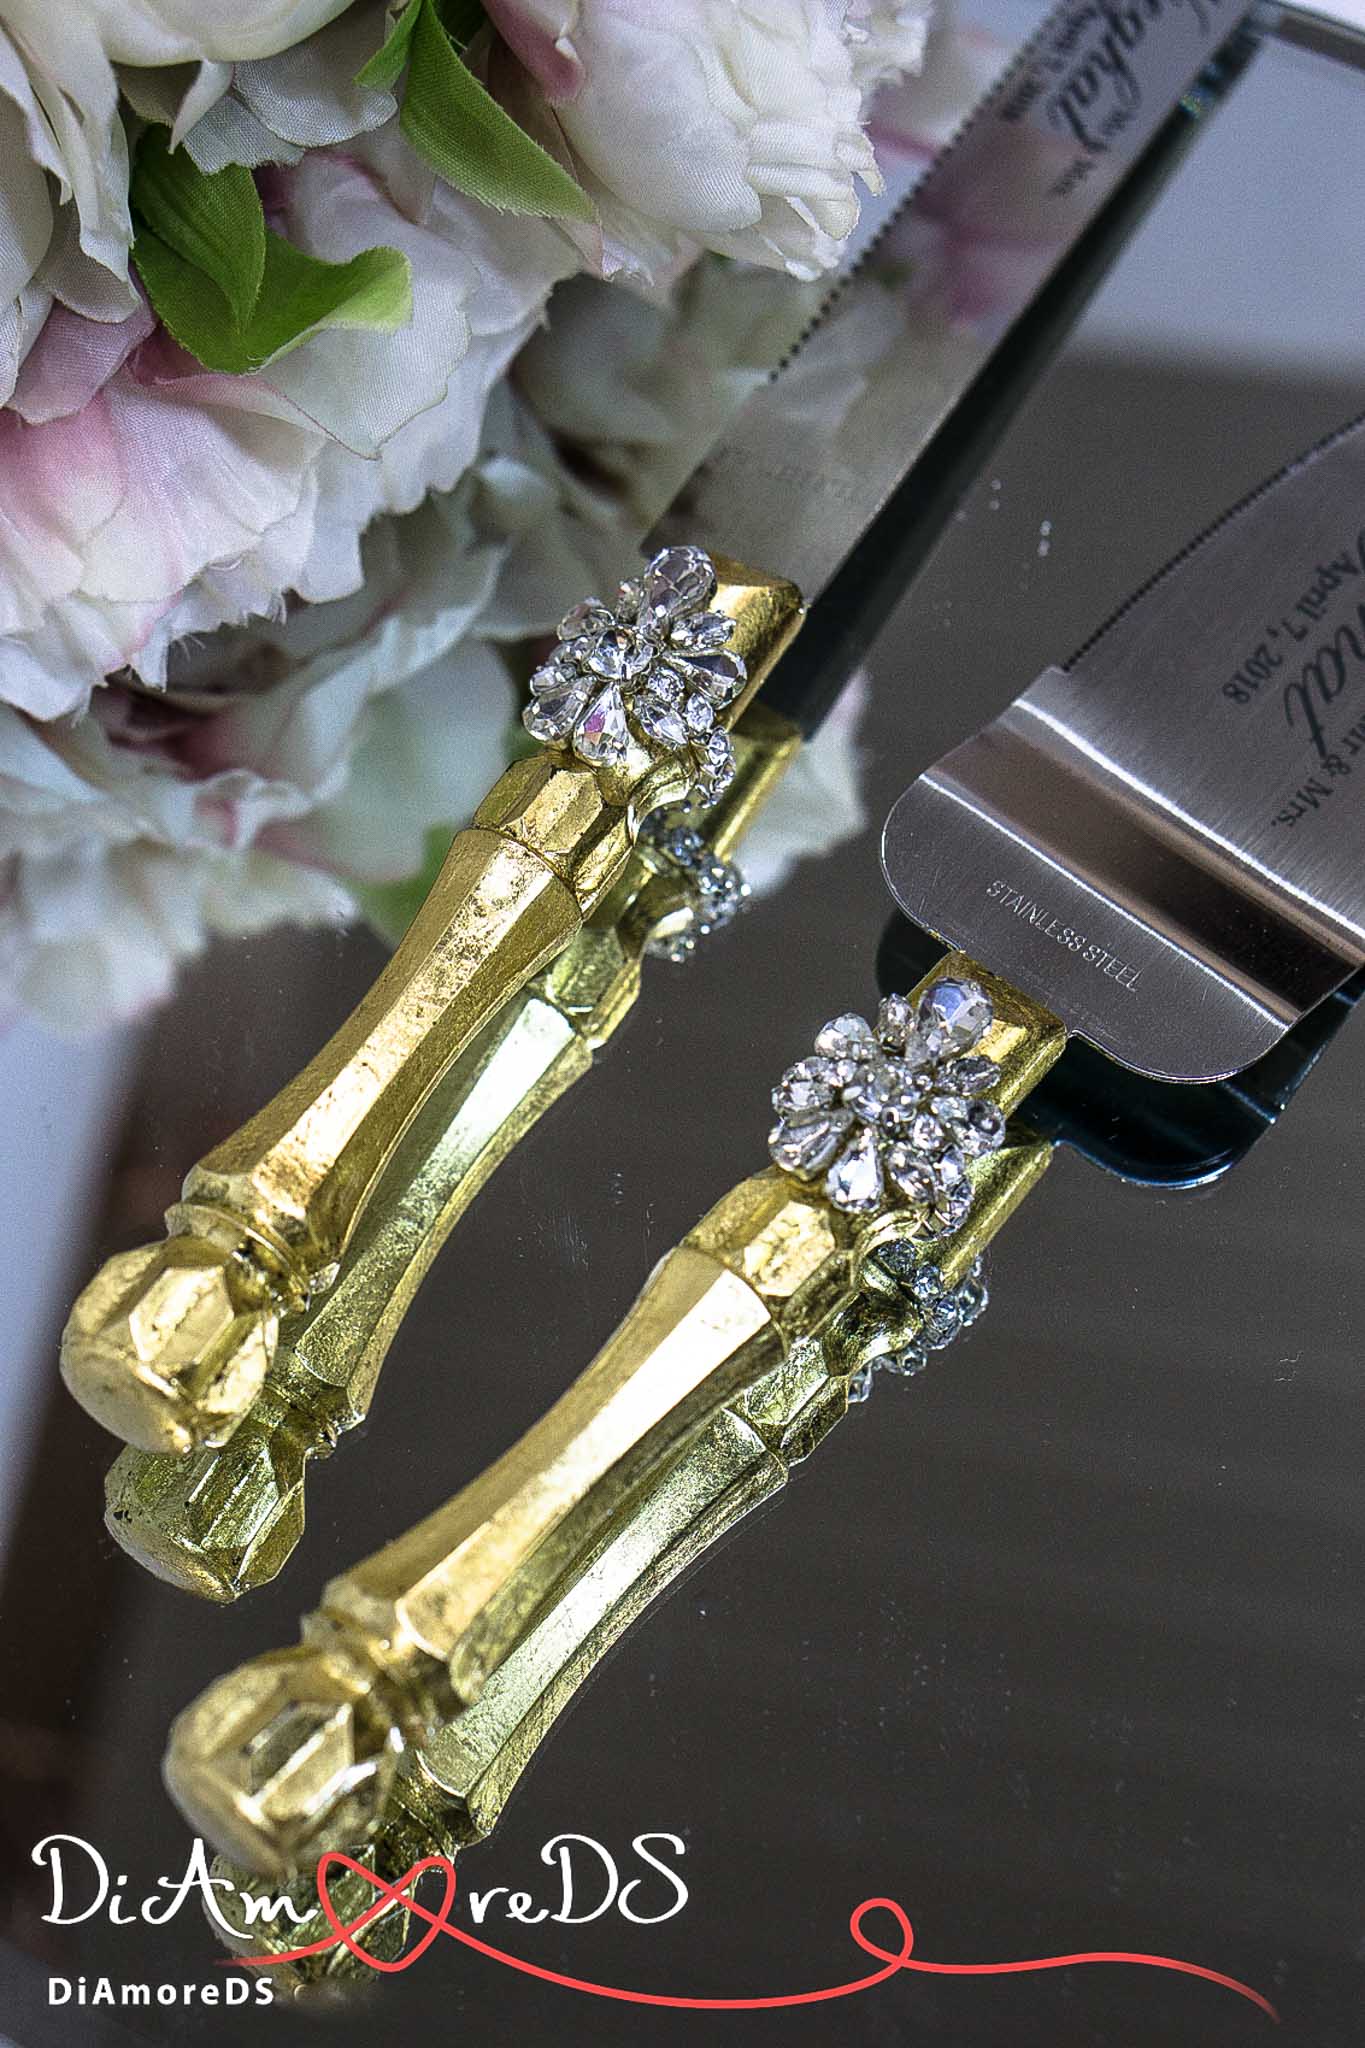 Luxurious wedding utensils with exquisite detailing